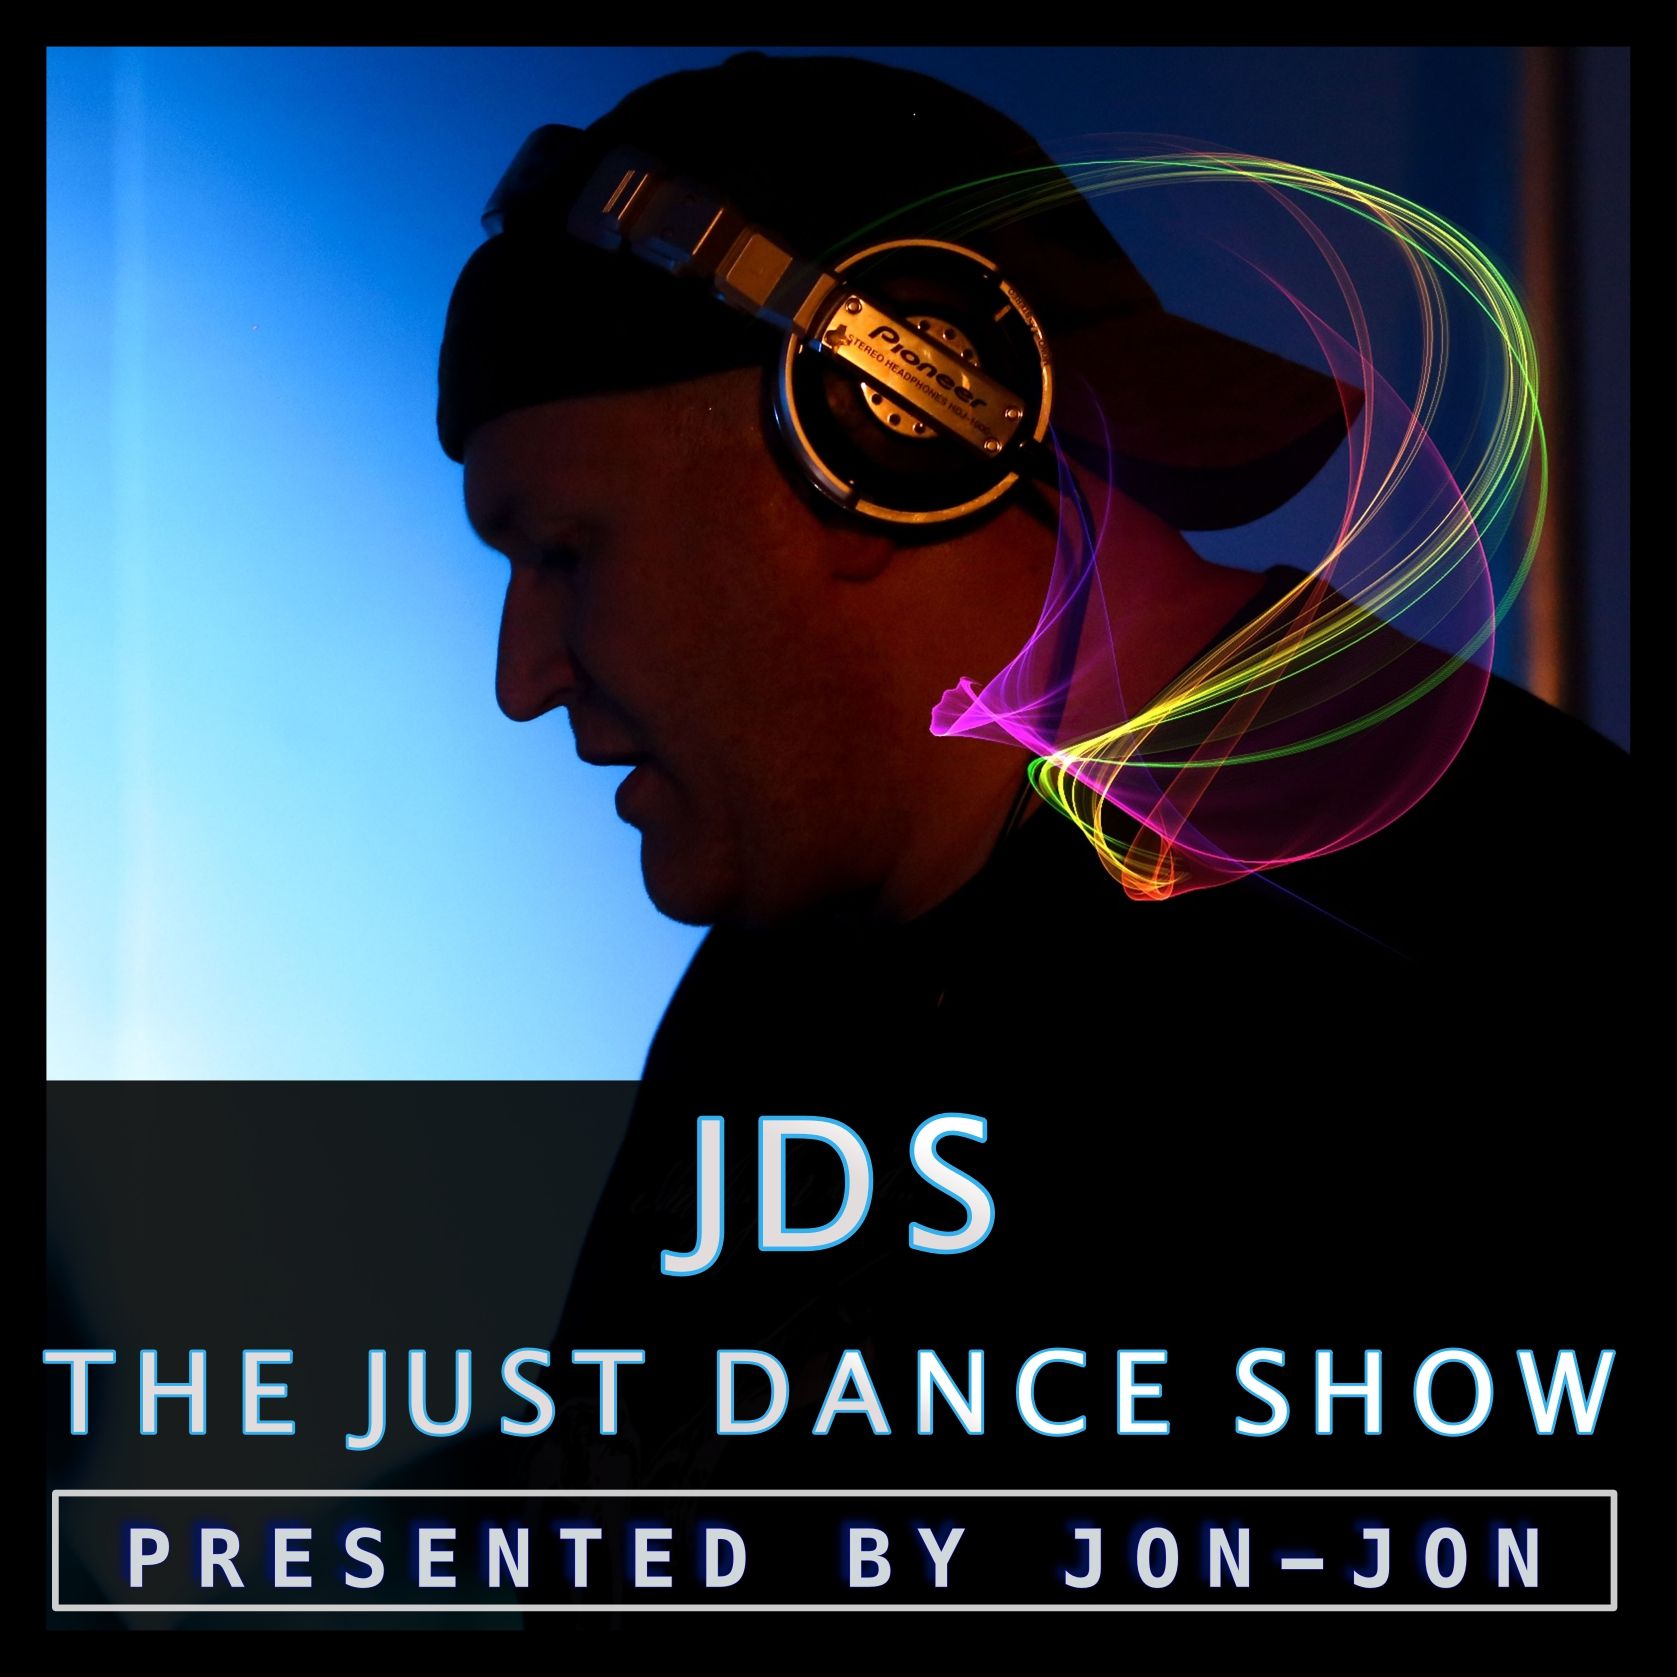 JDS (The Just Dance Show ) - Presented by Jon-Jon